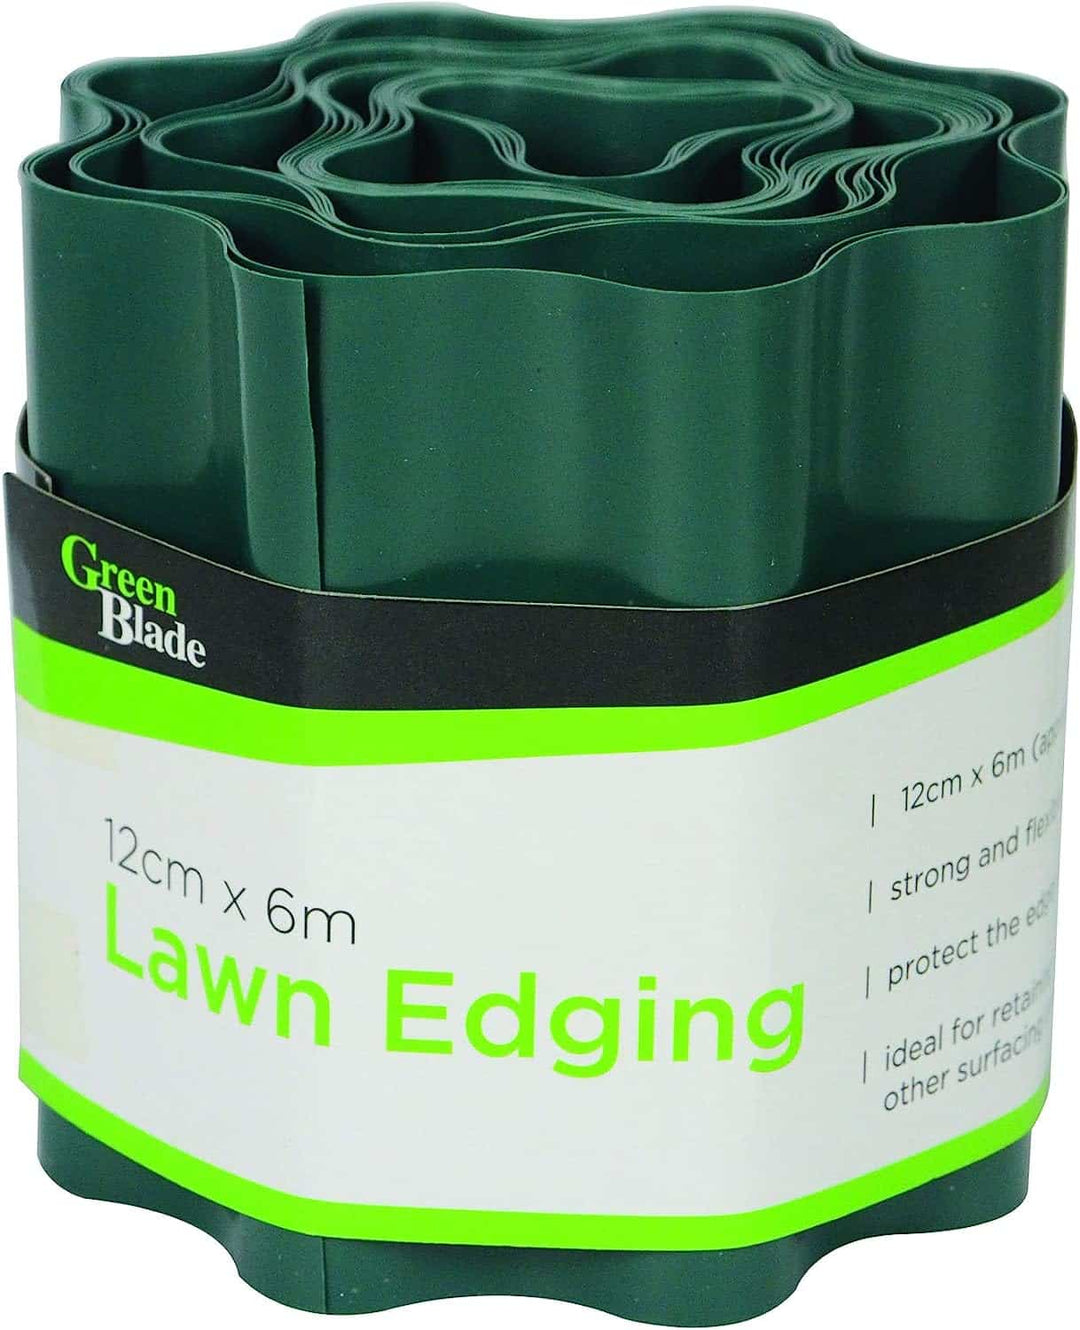 Green Blade BE105 12cm x 6m Lawn Edging - LGC